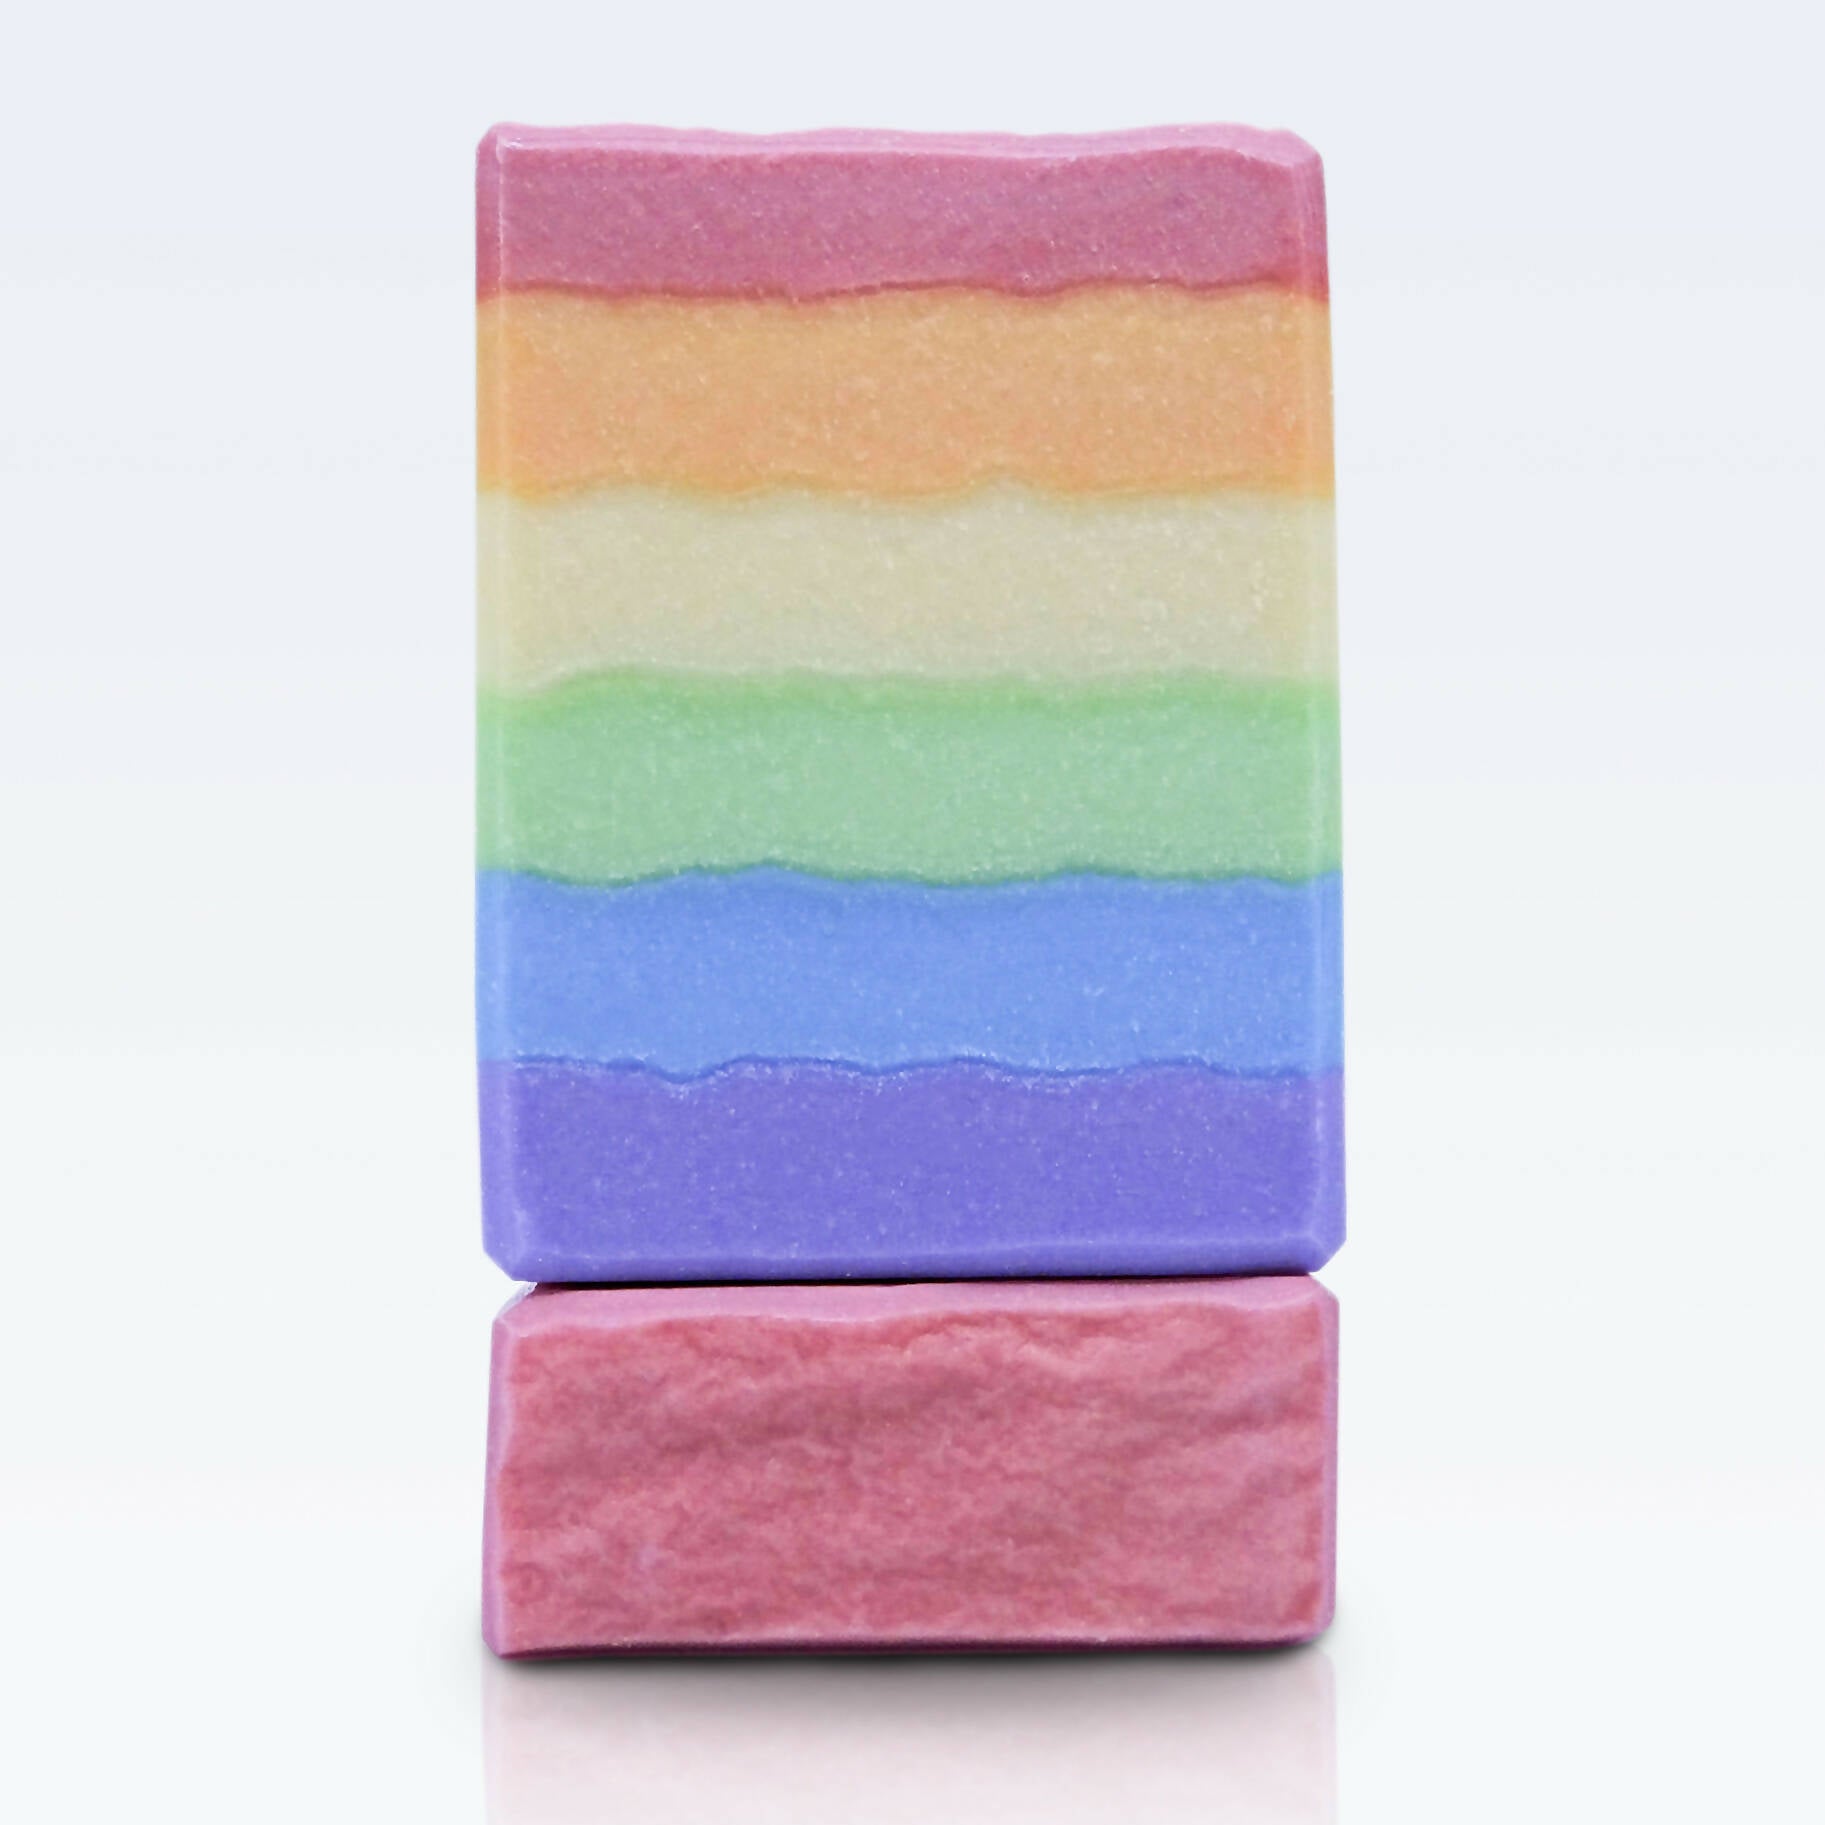 Single Rainbow unscented handmade soap